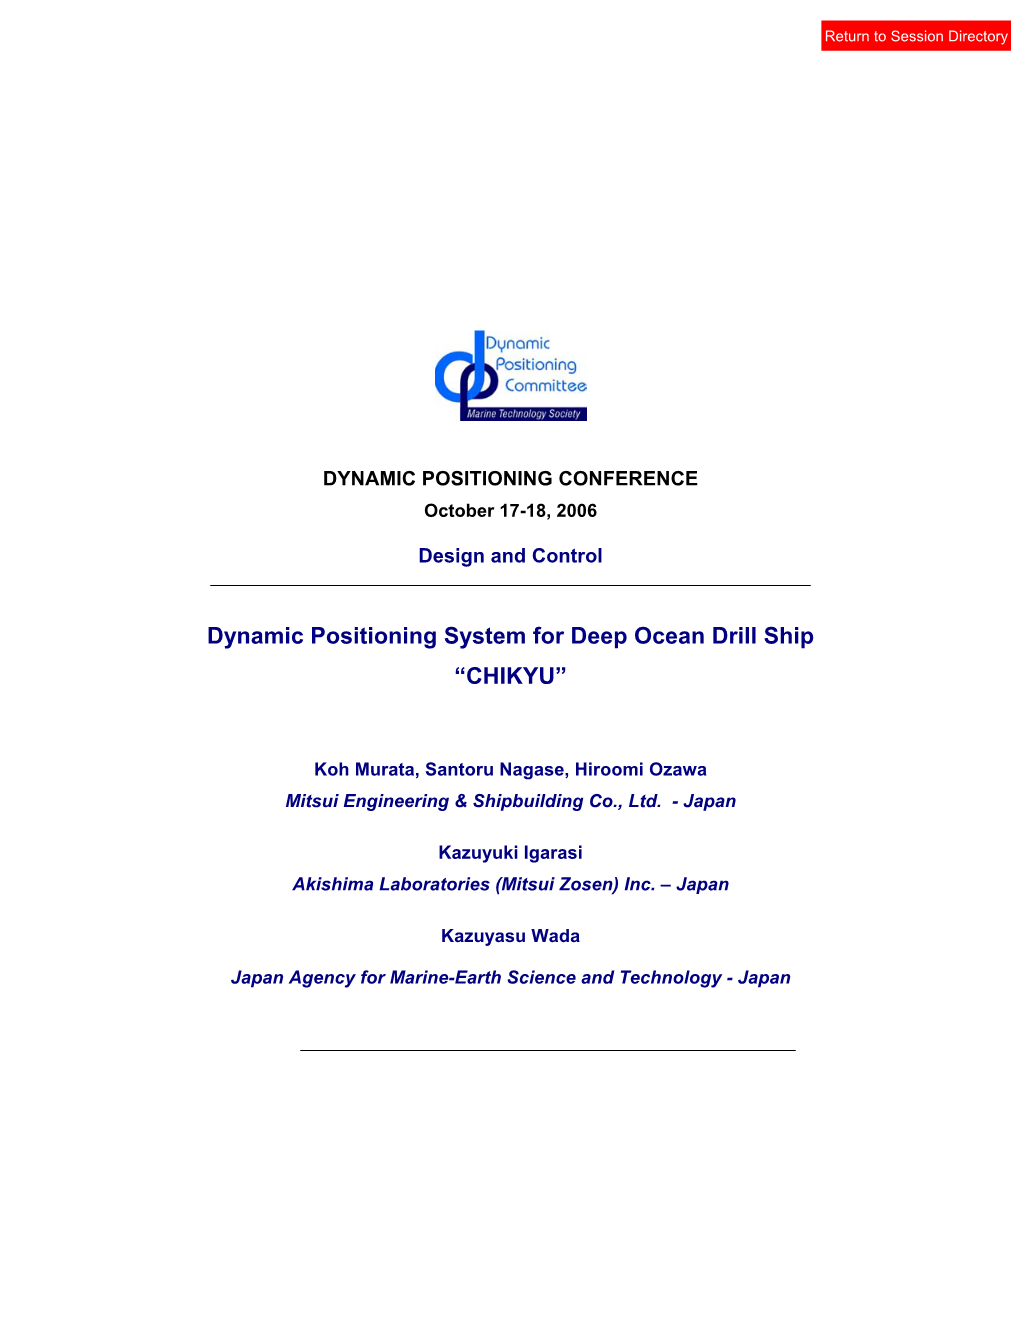 Dynamic Positioning System for Deep Ocean Drill Ship “CHIKYU”